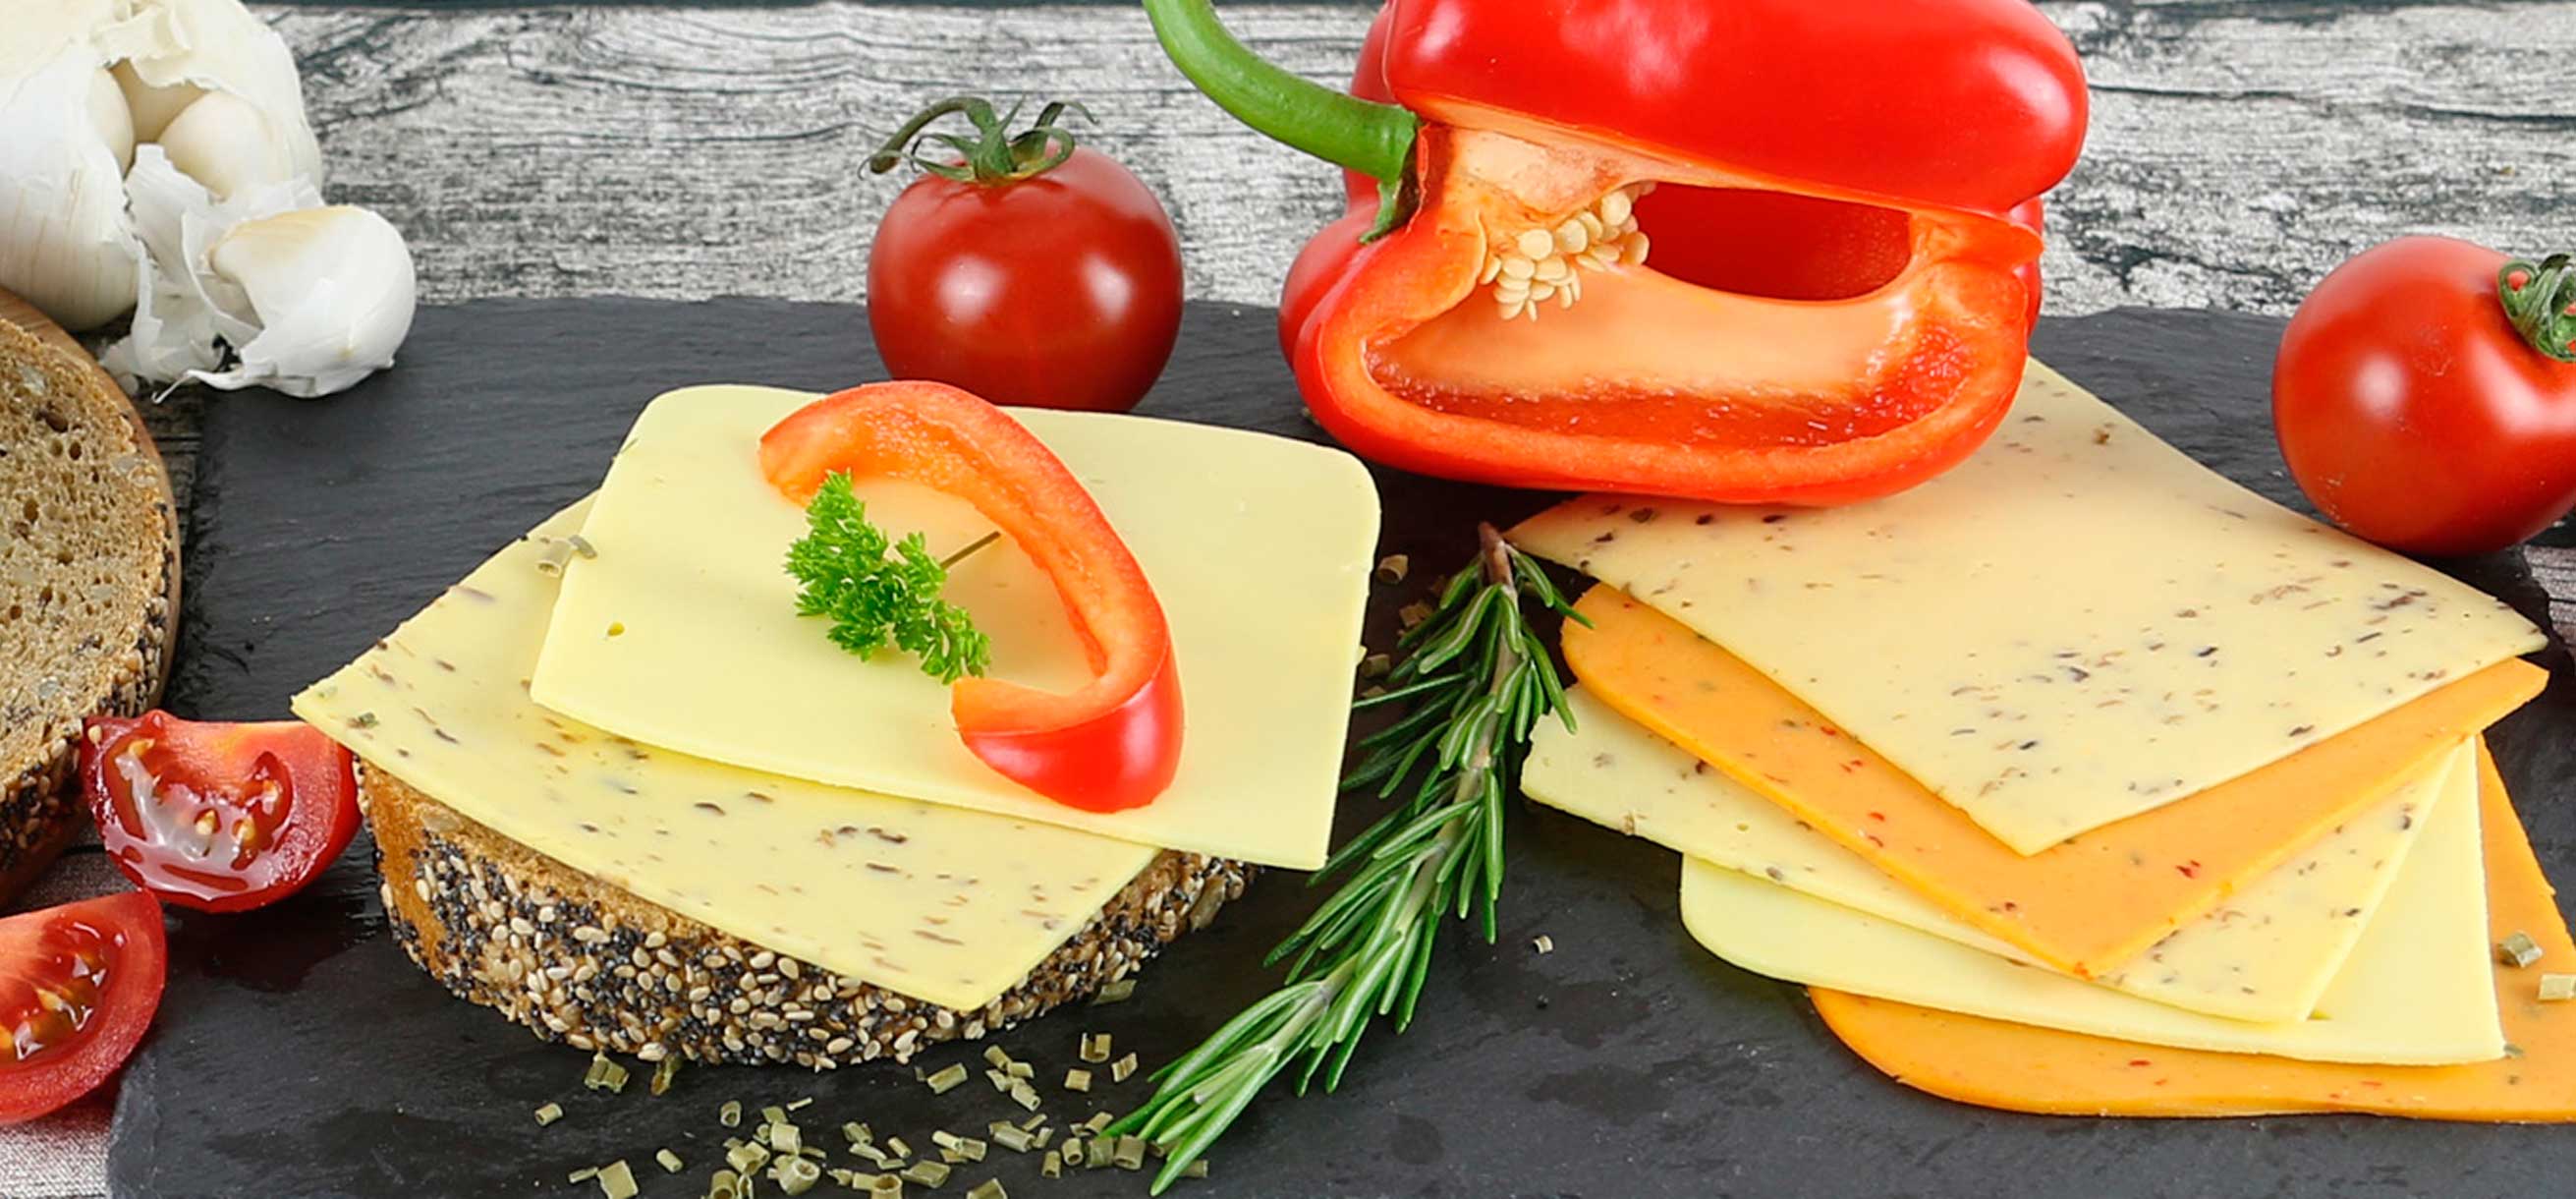 Wilmersburger vegane Käse-Alternative zu Käse